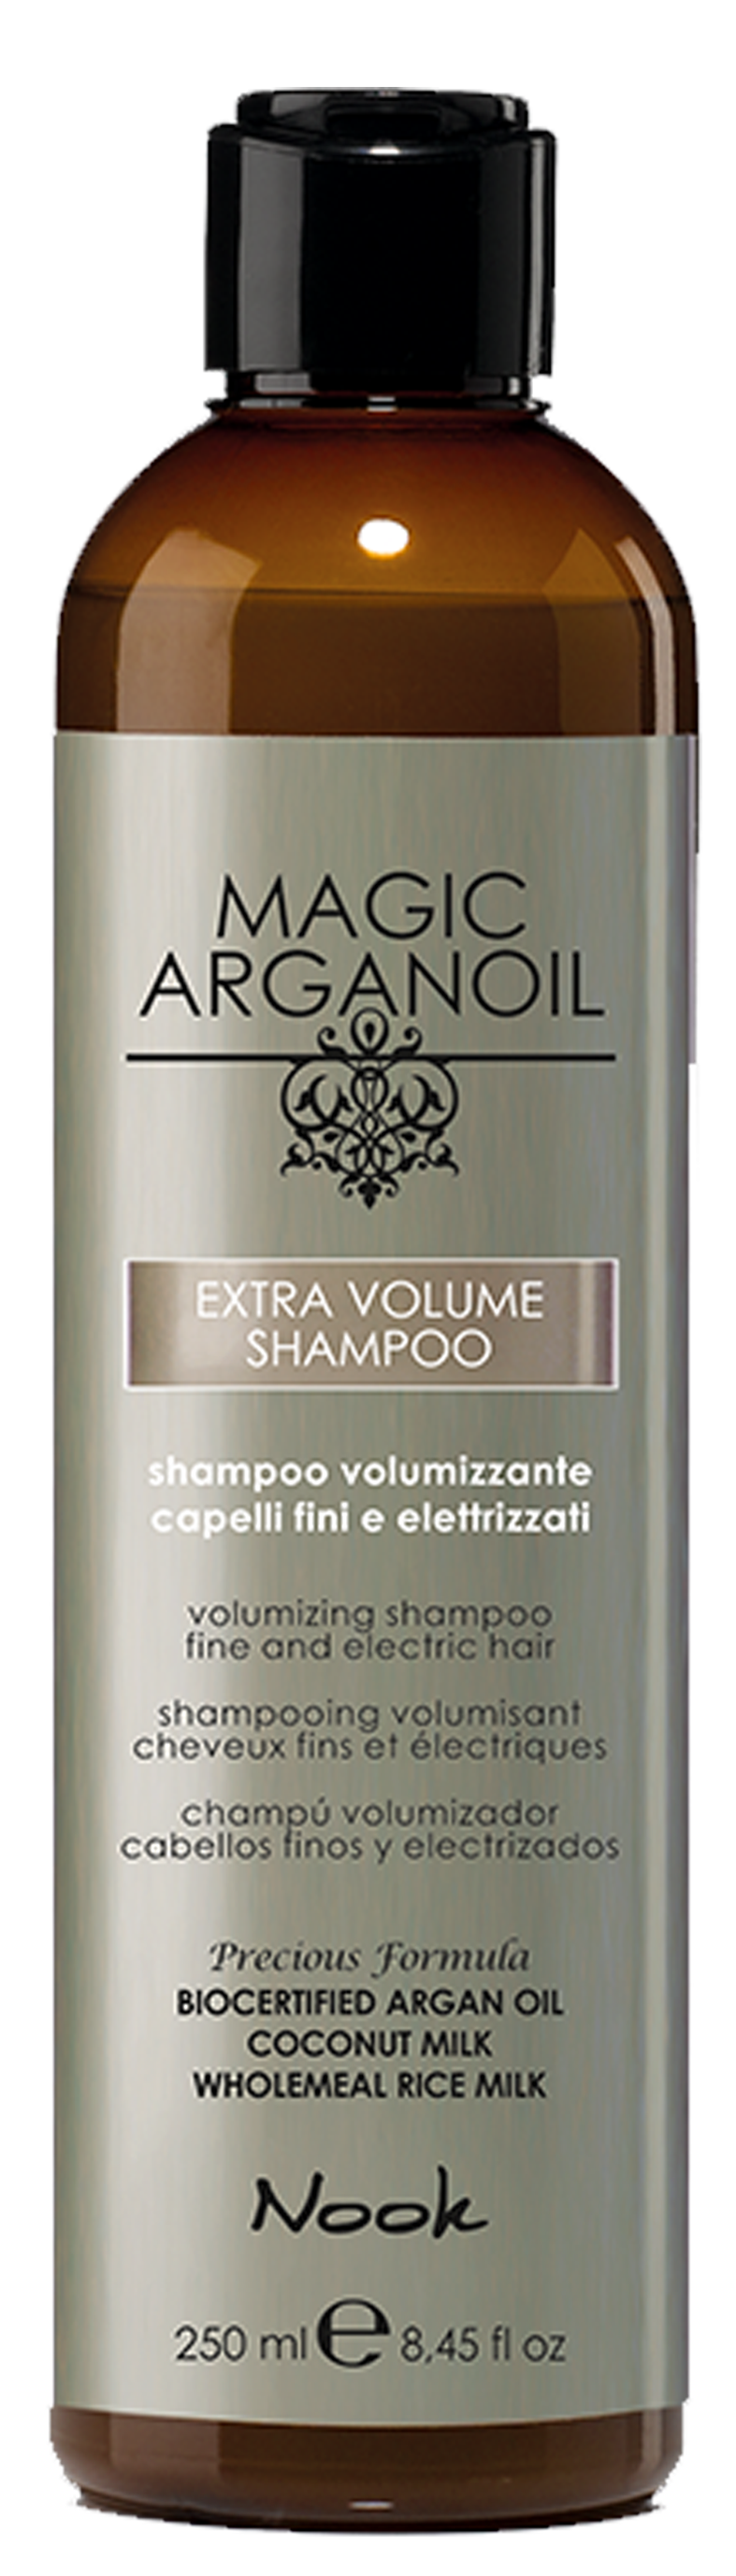 27012 M.ARGANOIL extravolume shampoo 250